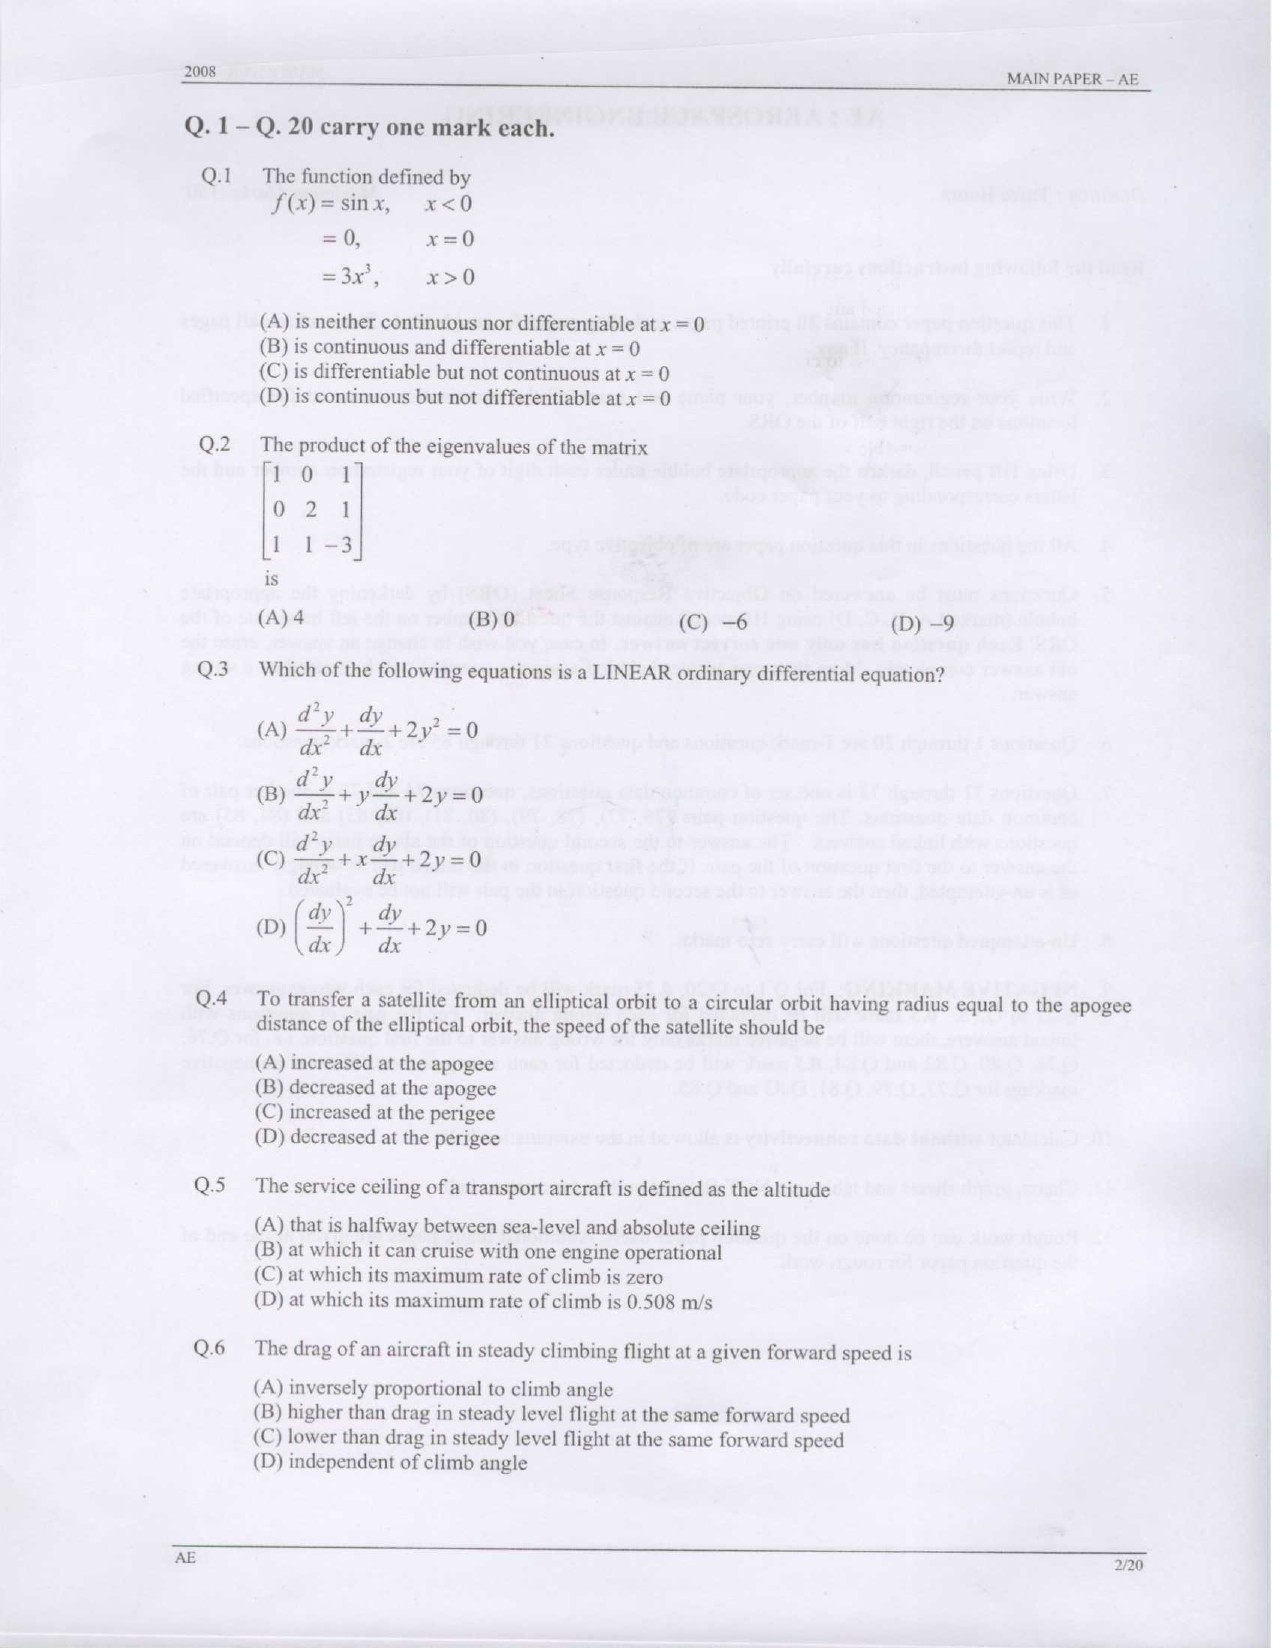 GATE Exam 2008 Aerospace Engineering Question Paper 2